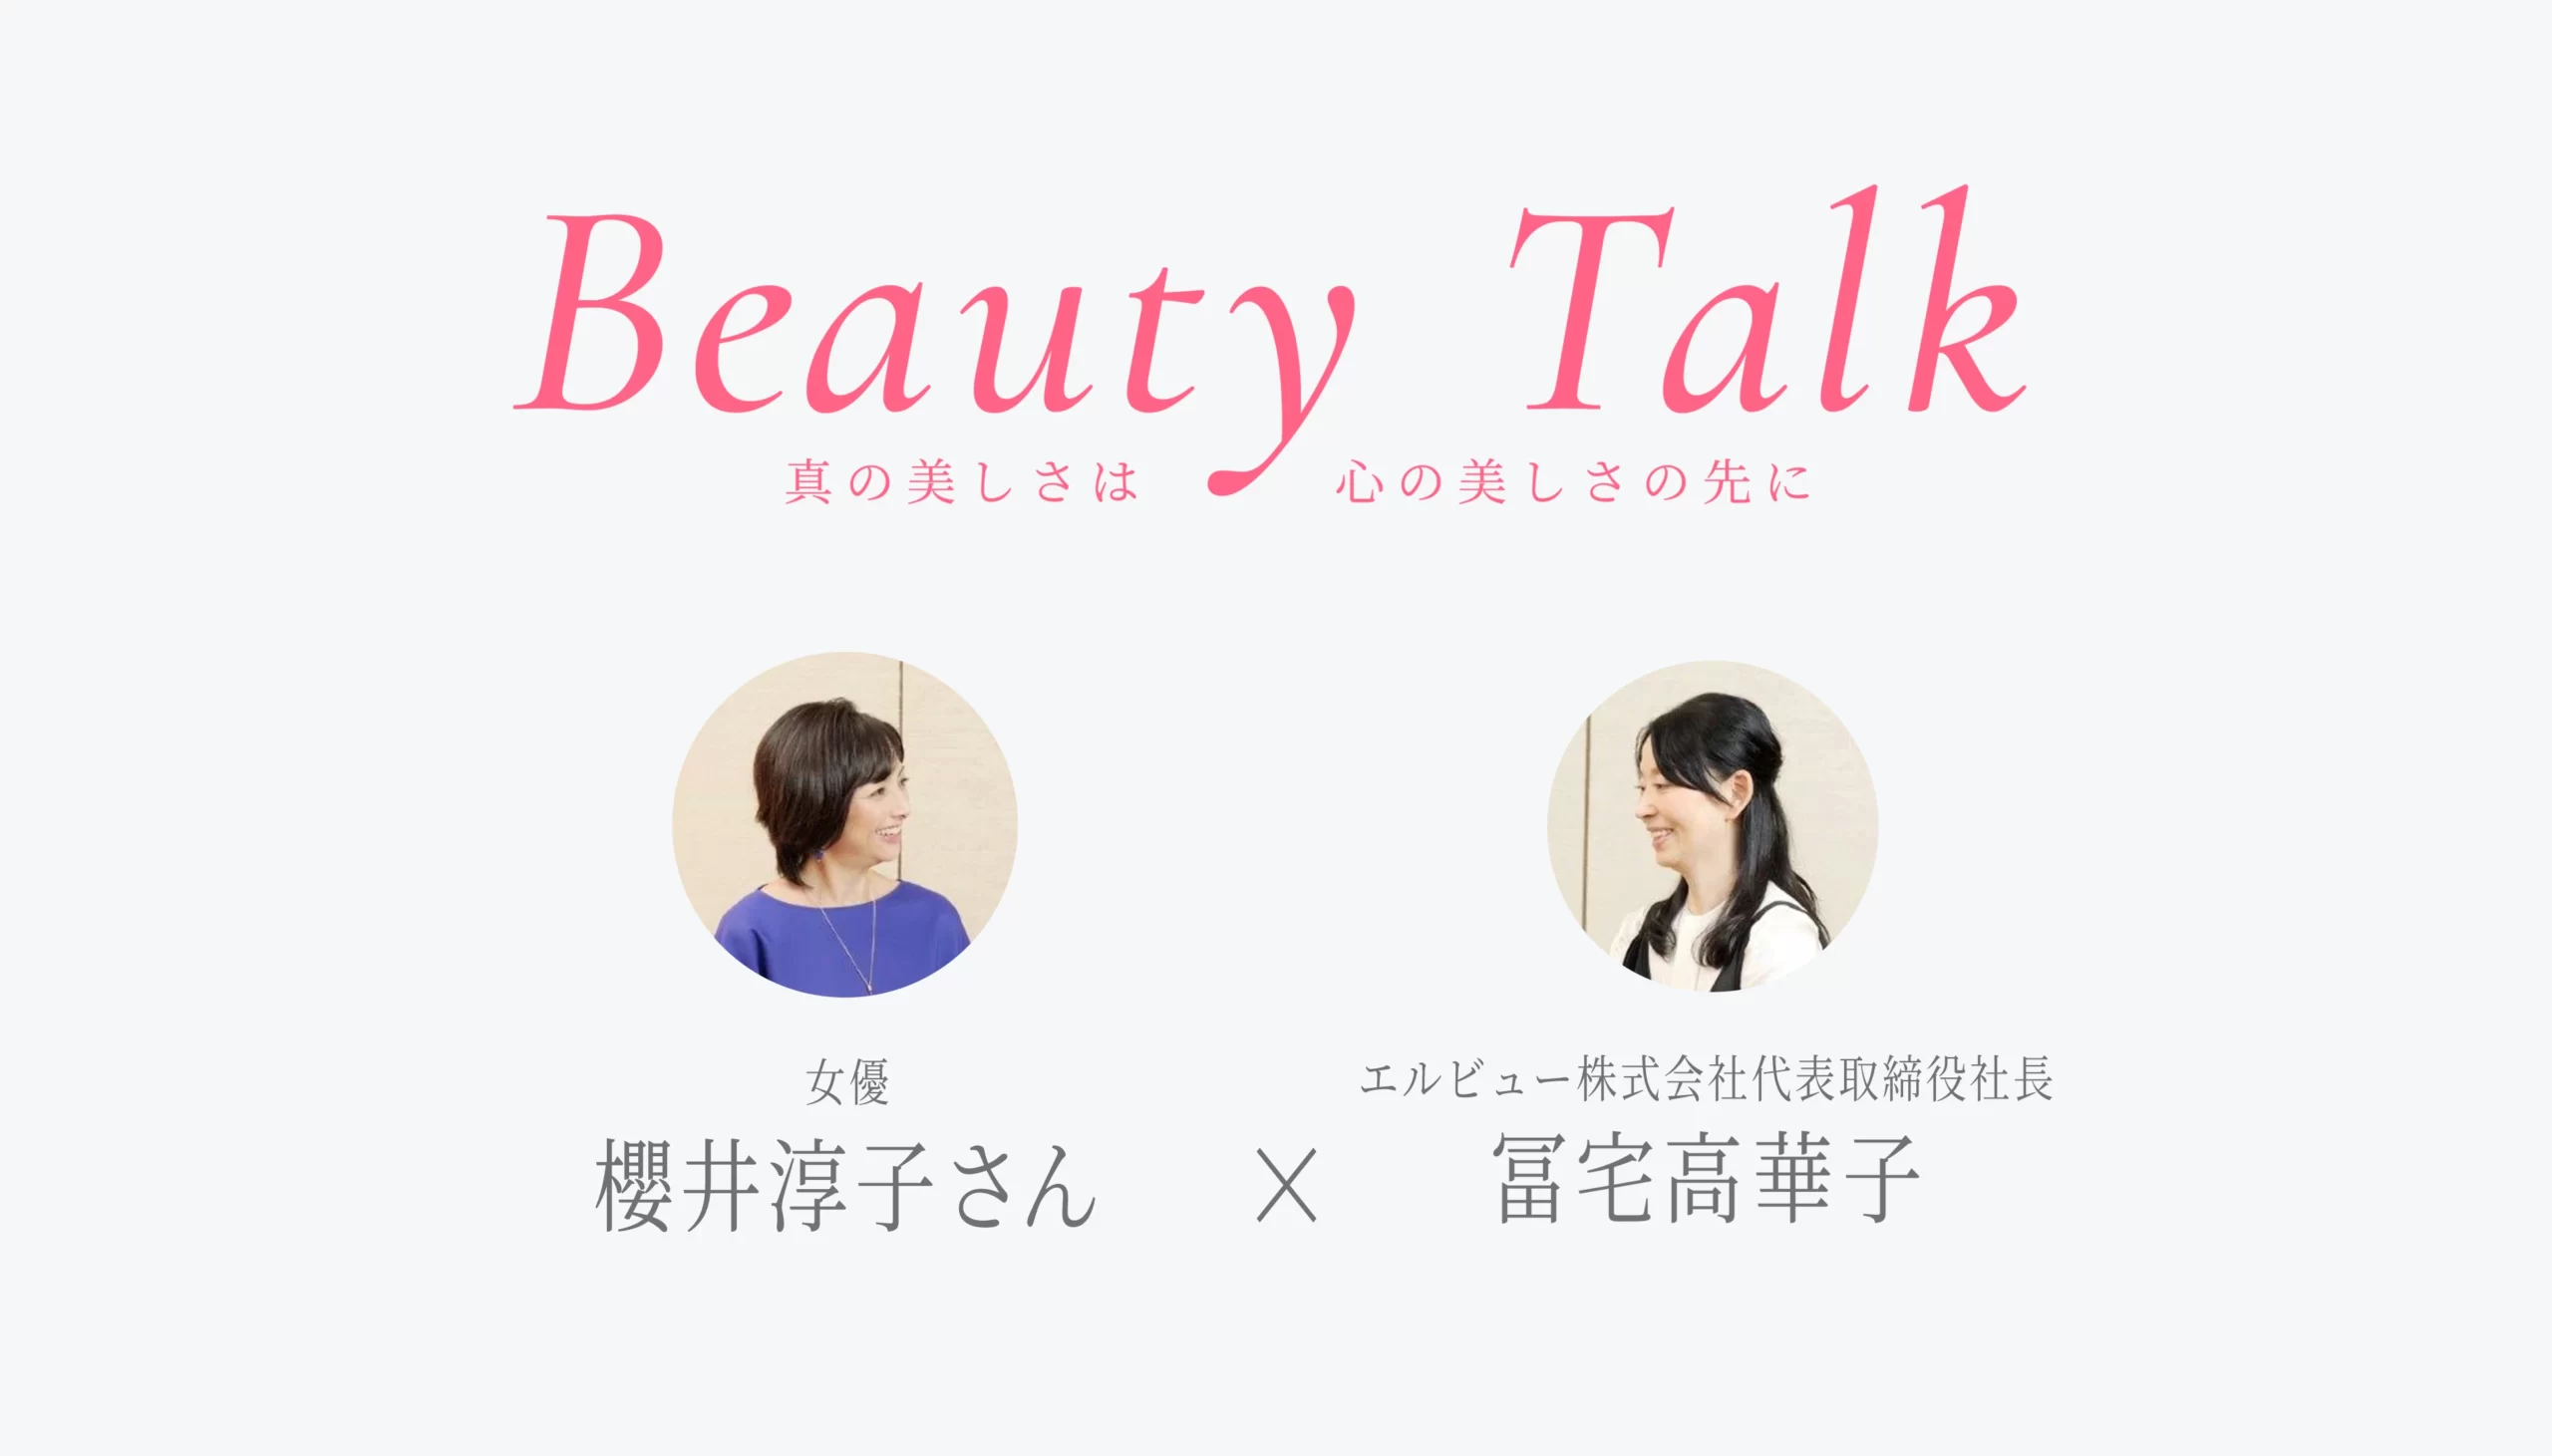 Beauty Talk Vol.39 櫻井淳子